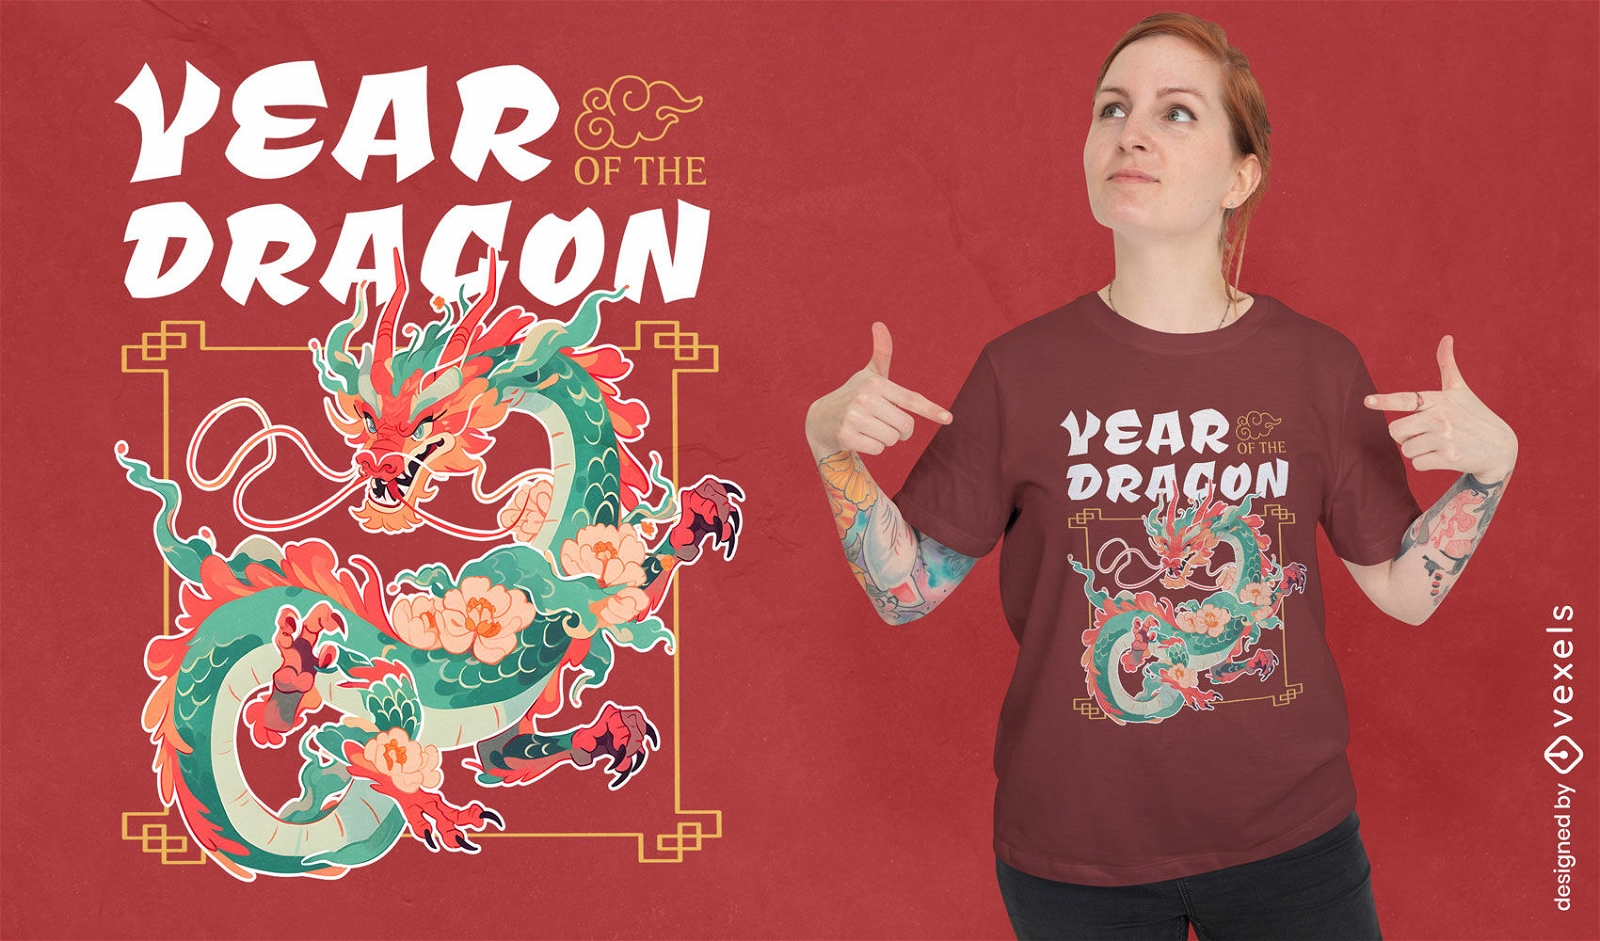 Jahr des Drachenkreatur-T-Shirt-Designs